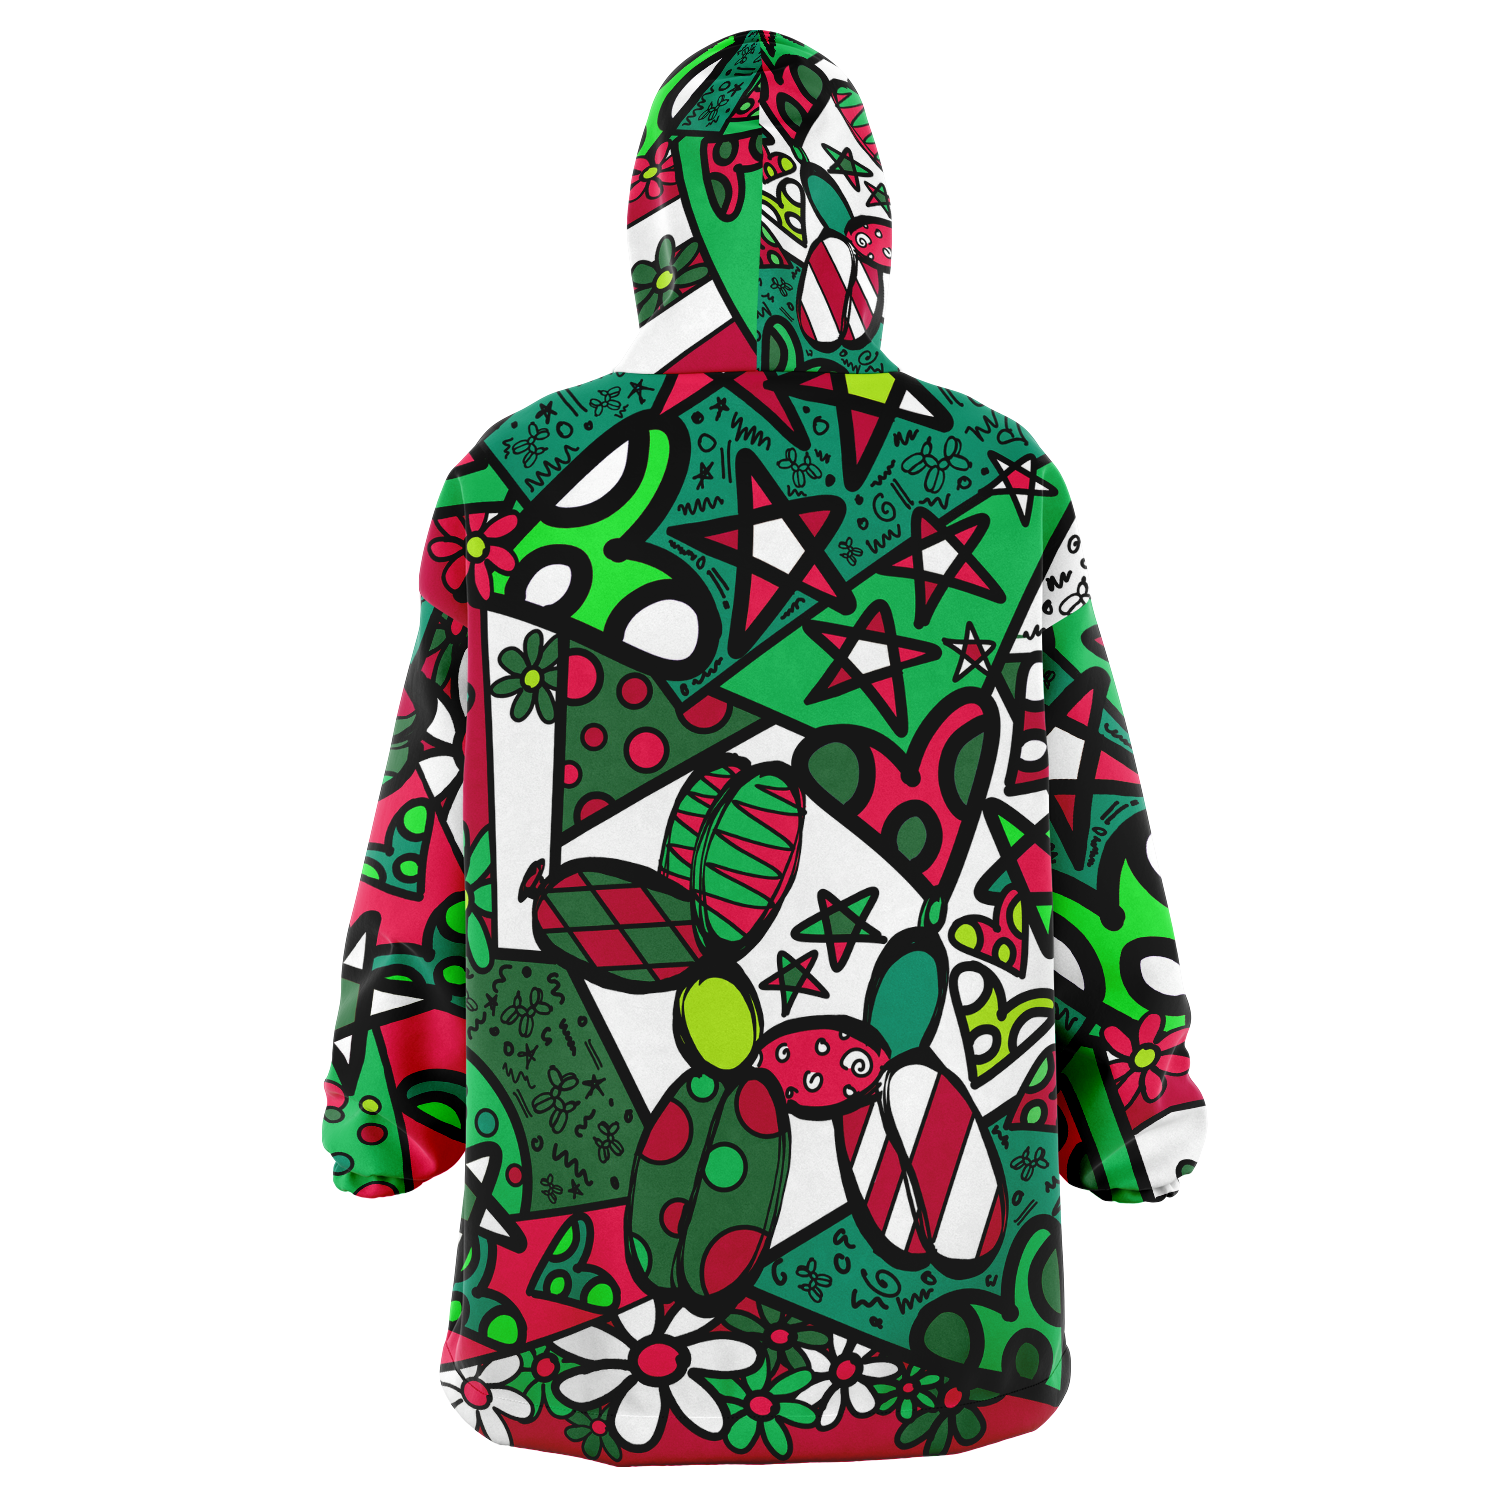 Christmas snuggyz cozy hooded blanket - balloon dog apparel